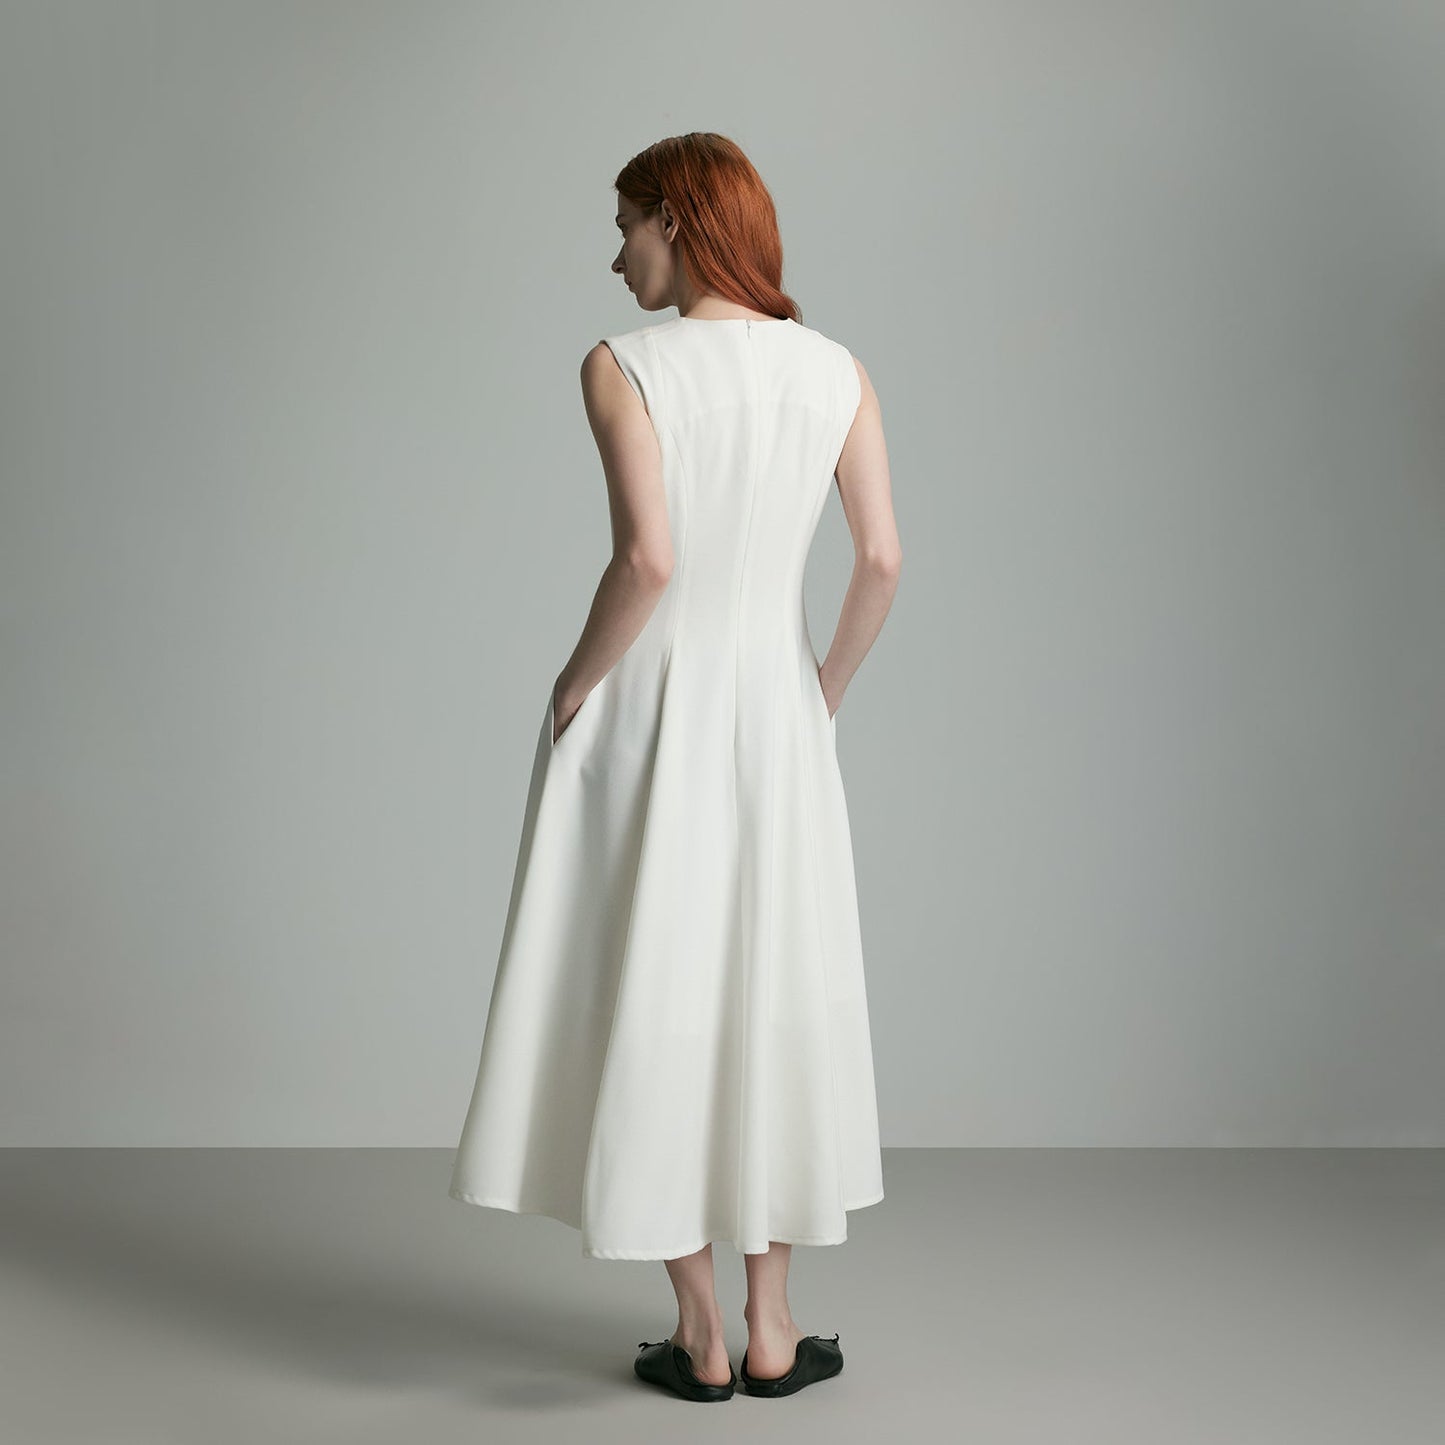 White Sleeveless Dress_DI100236